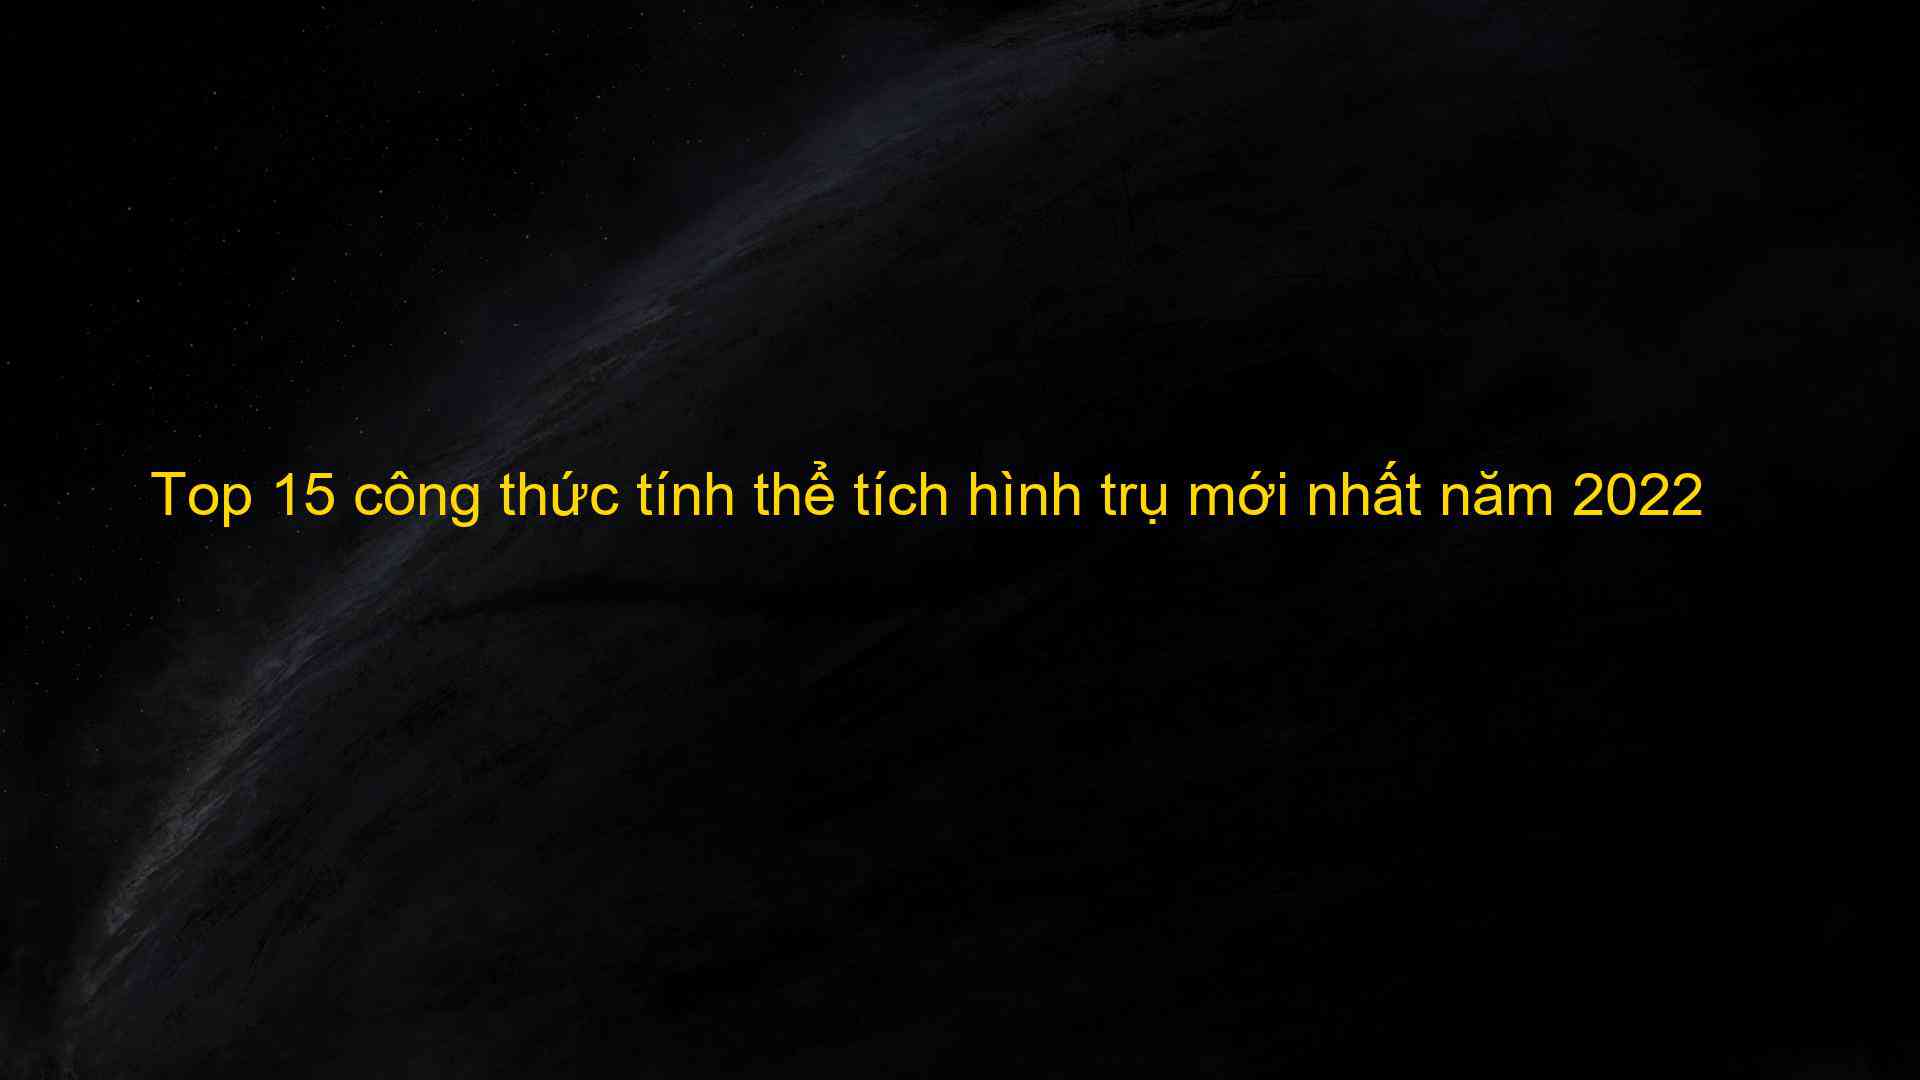 Top 15 cong thuc tinh the tich hinh tru moi nhat nam 2022 1659710473